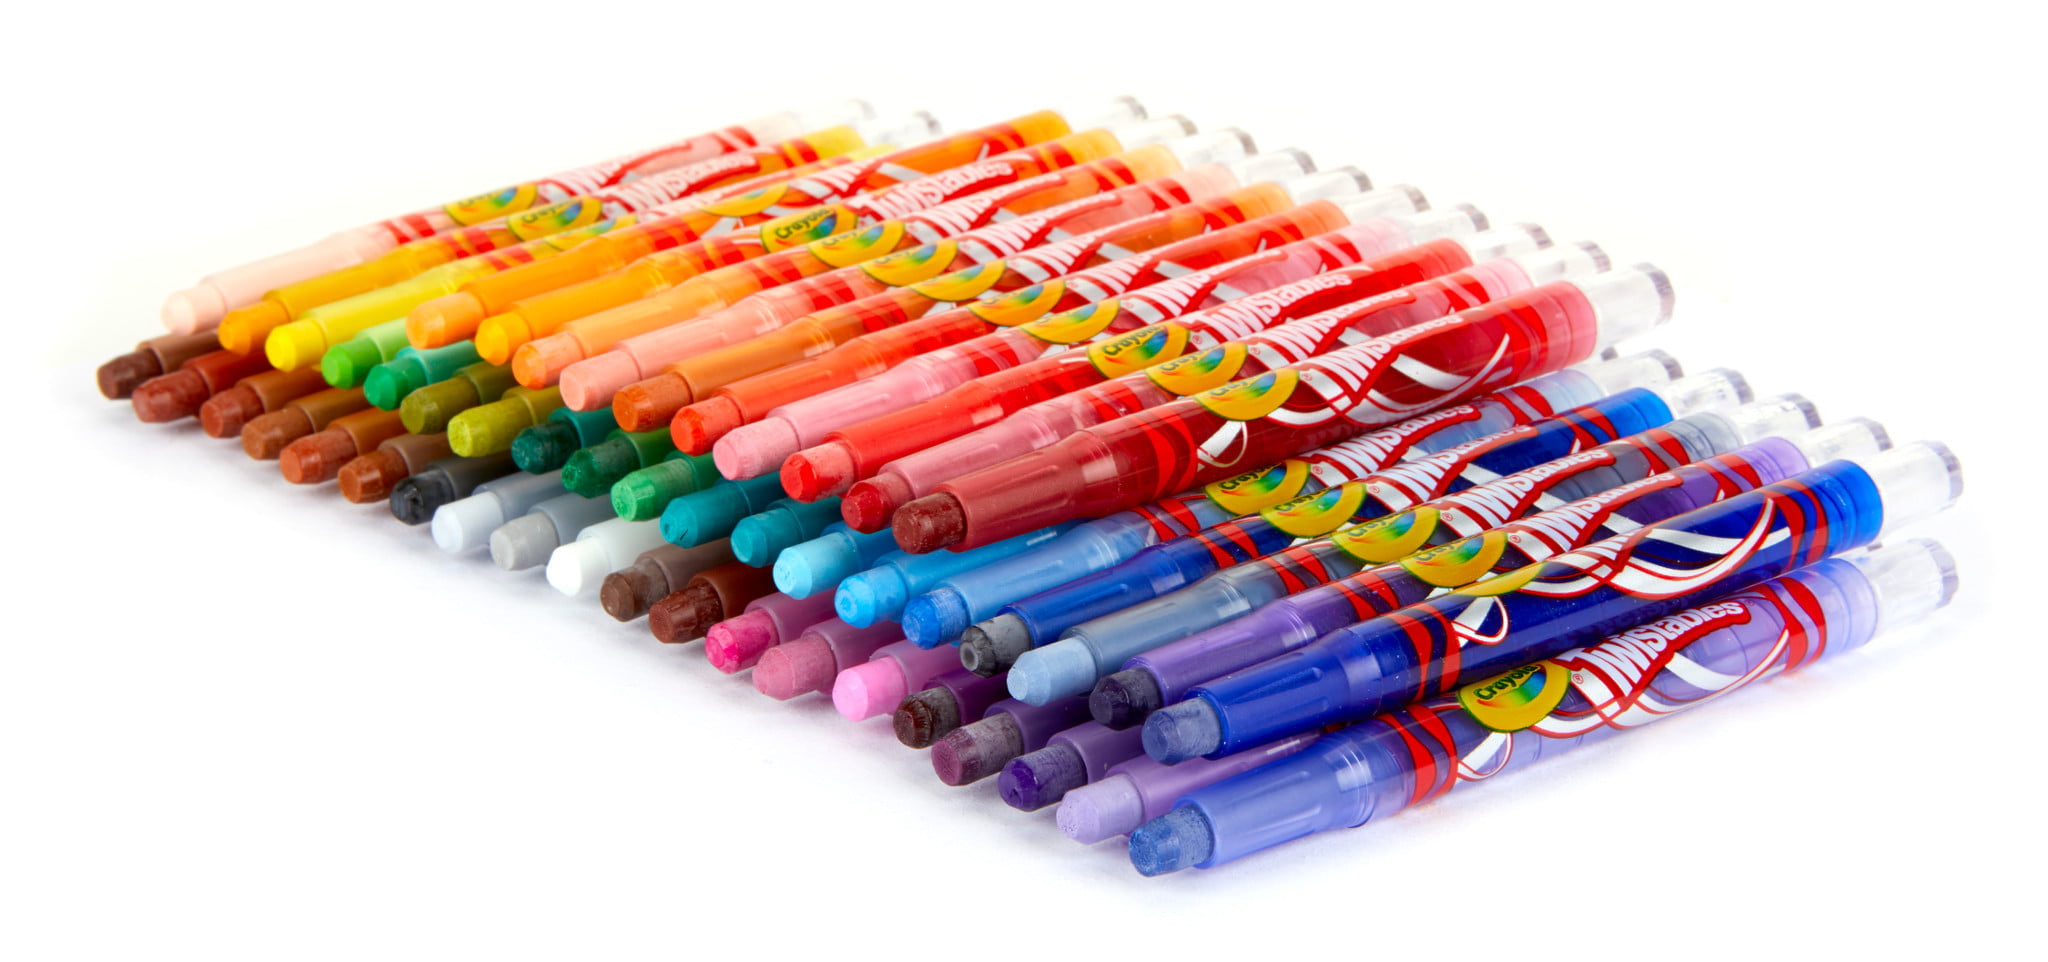 Crayola Fun-Effect Mini Twist Crayons – Child's Play